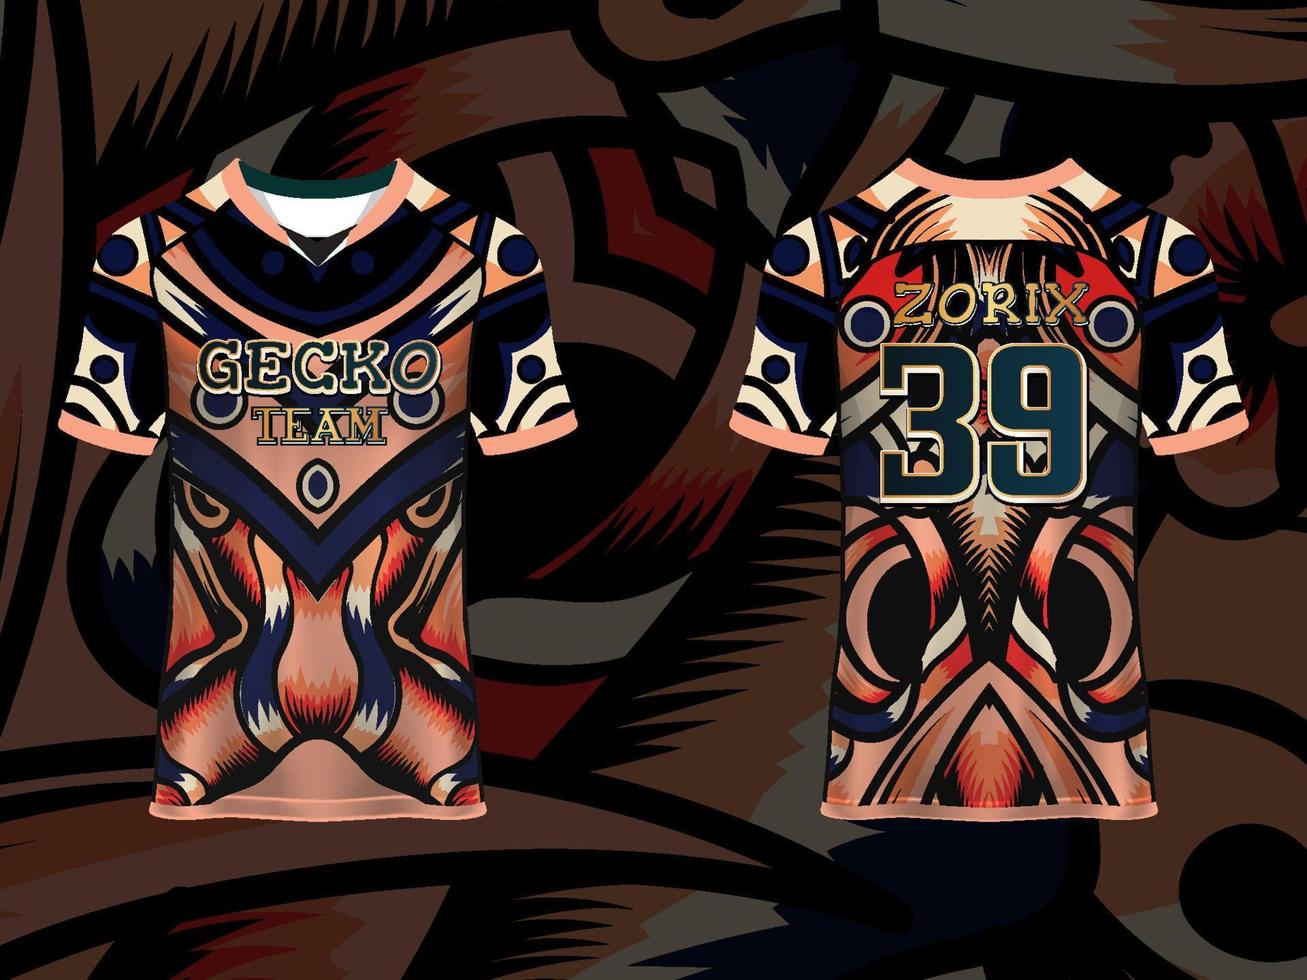 plantilla de diseño de camiseta de manga raglán abstracta para uniformes de equipo prendas de juego vector